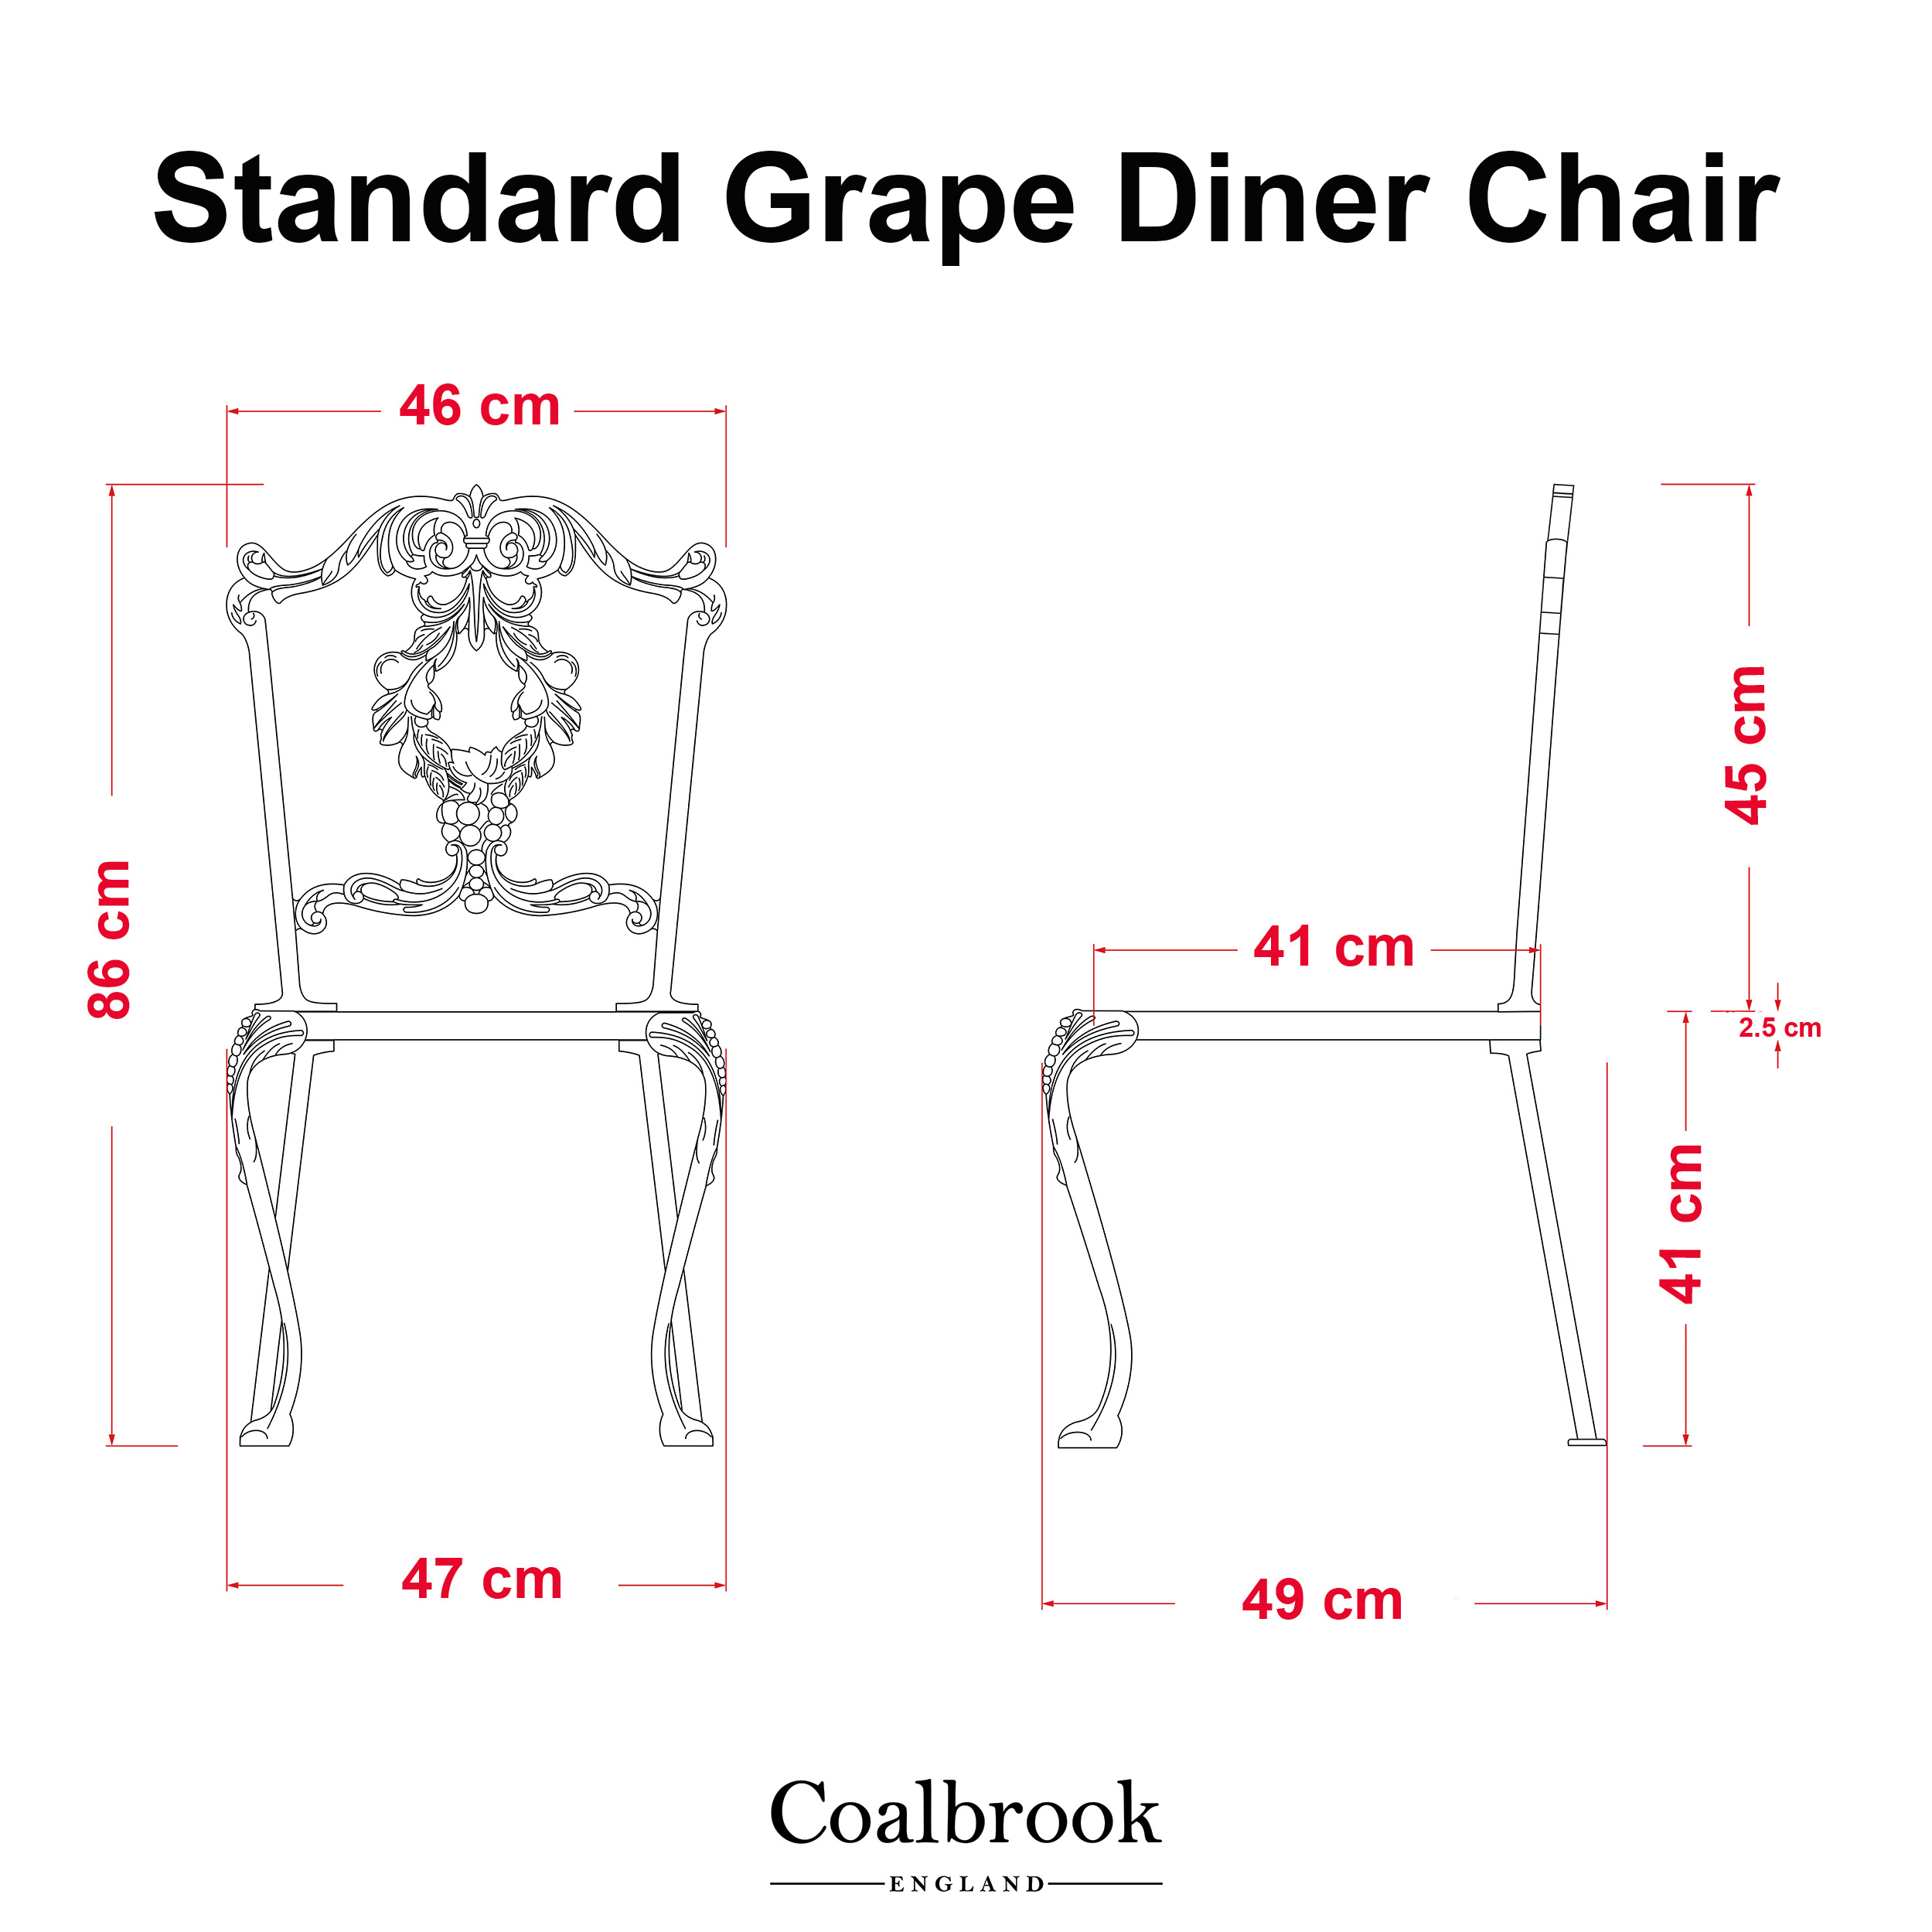 Standard Grape Diner Chair Measurements 2023